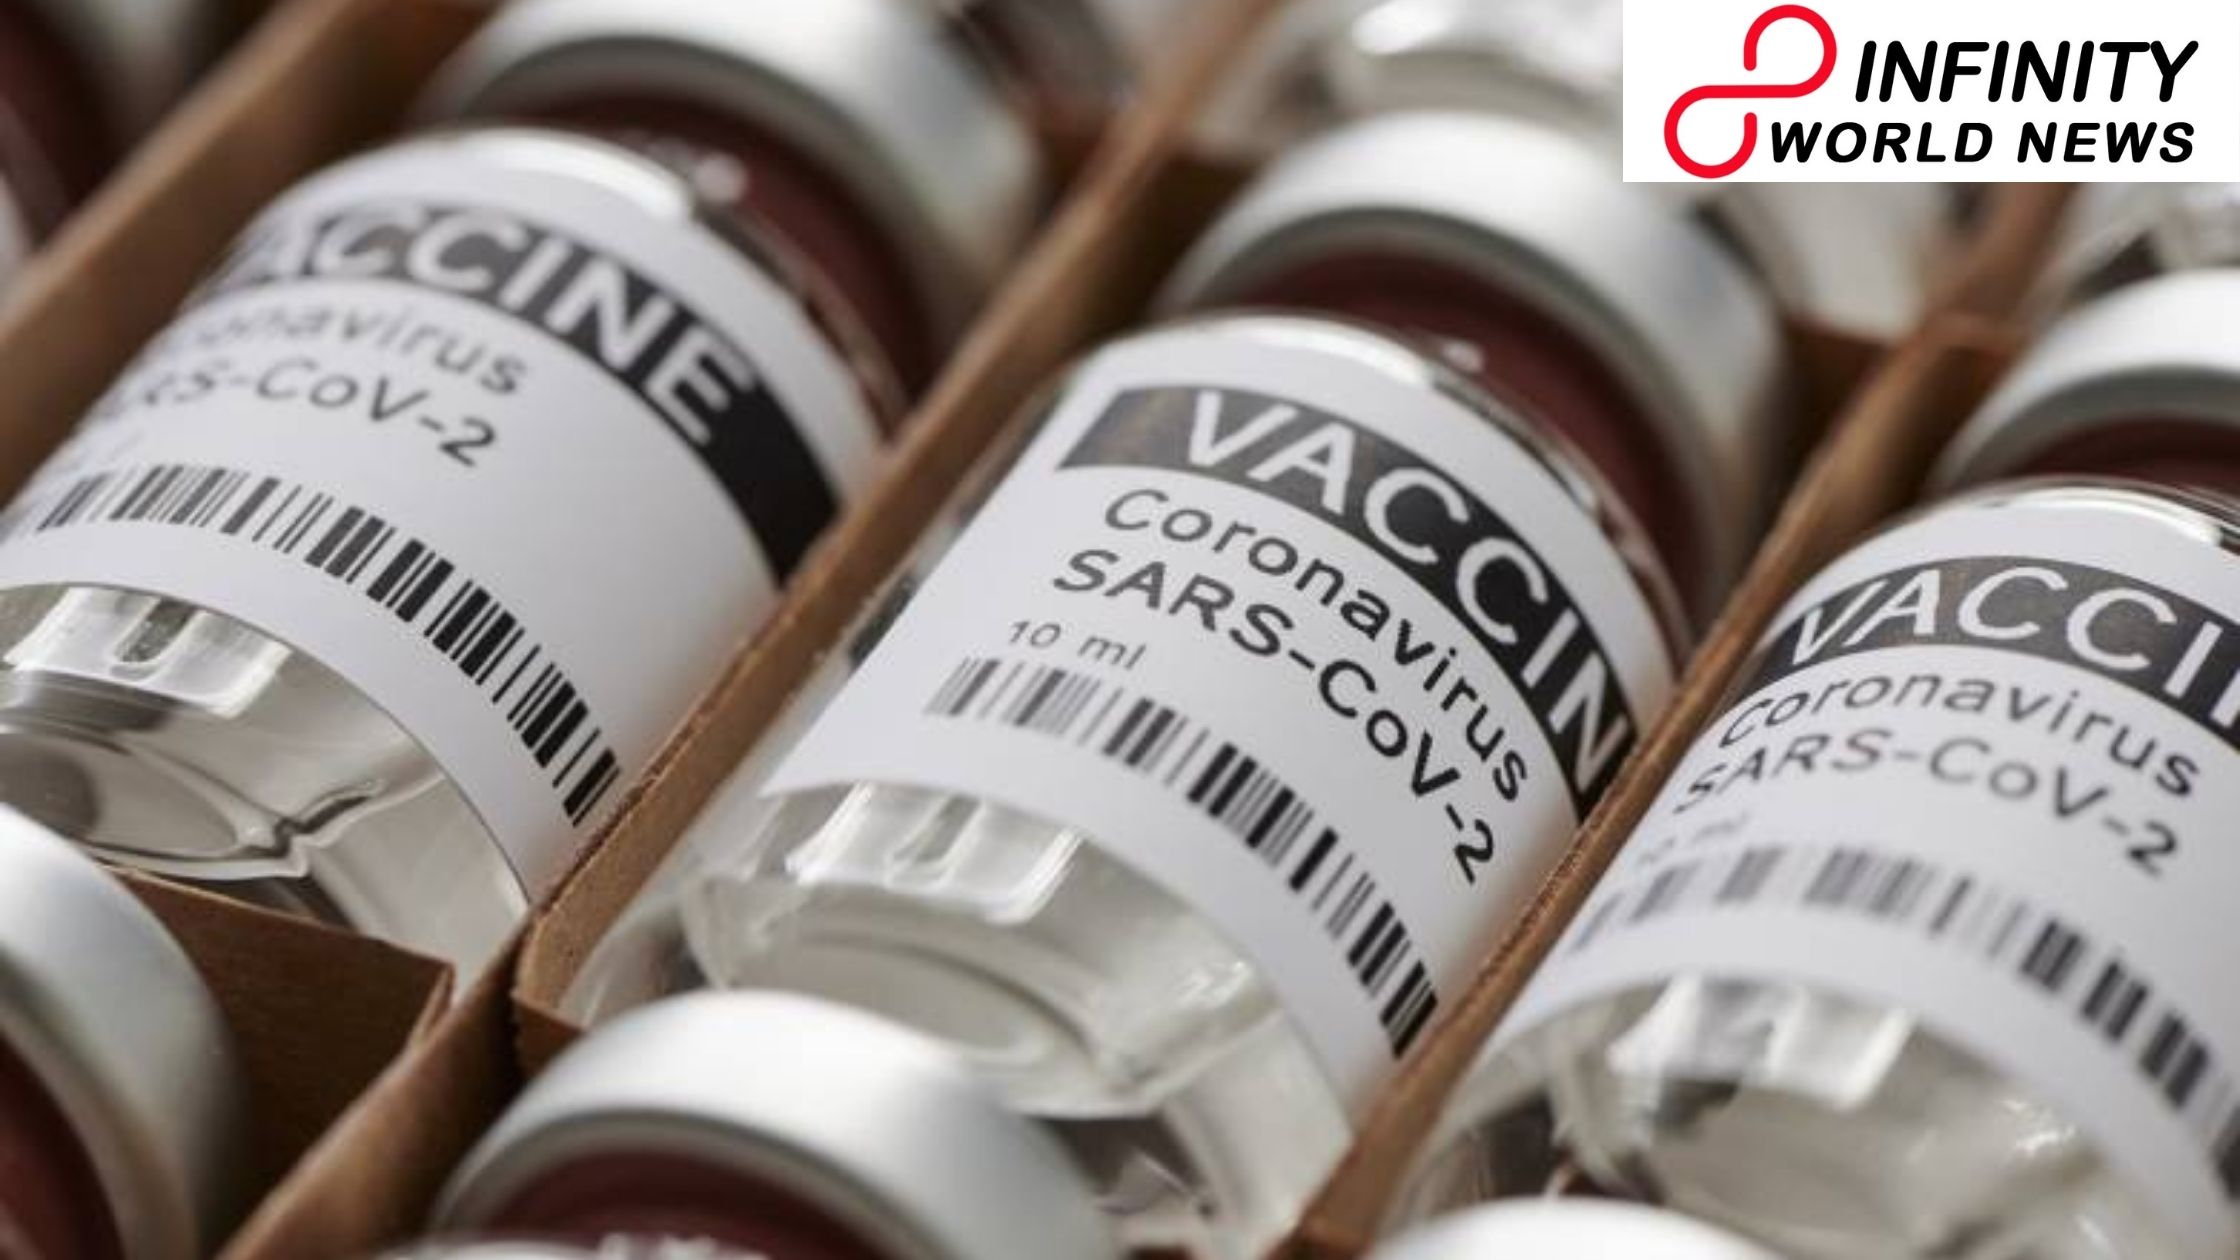 Russia Coronavirus immunization may arrive at Kanpur